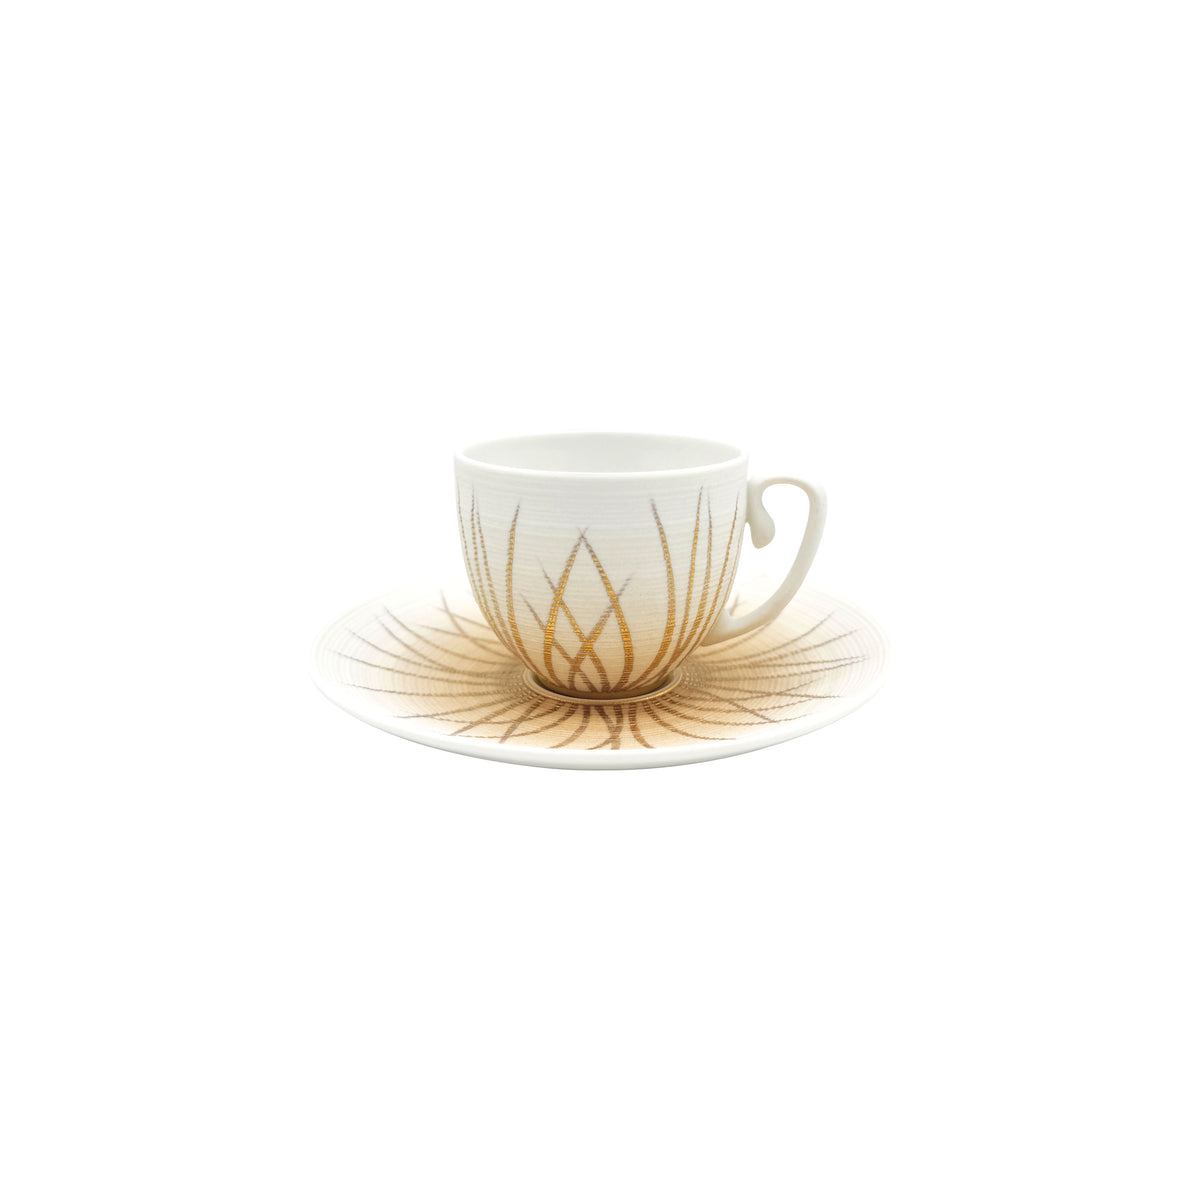 HEMISPHERE Tundra Autumn- Coffee set (cup & saucer)